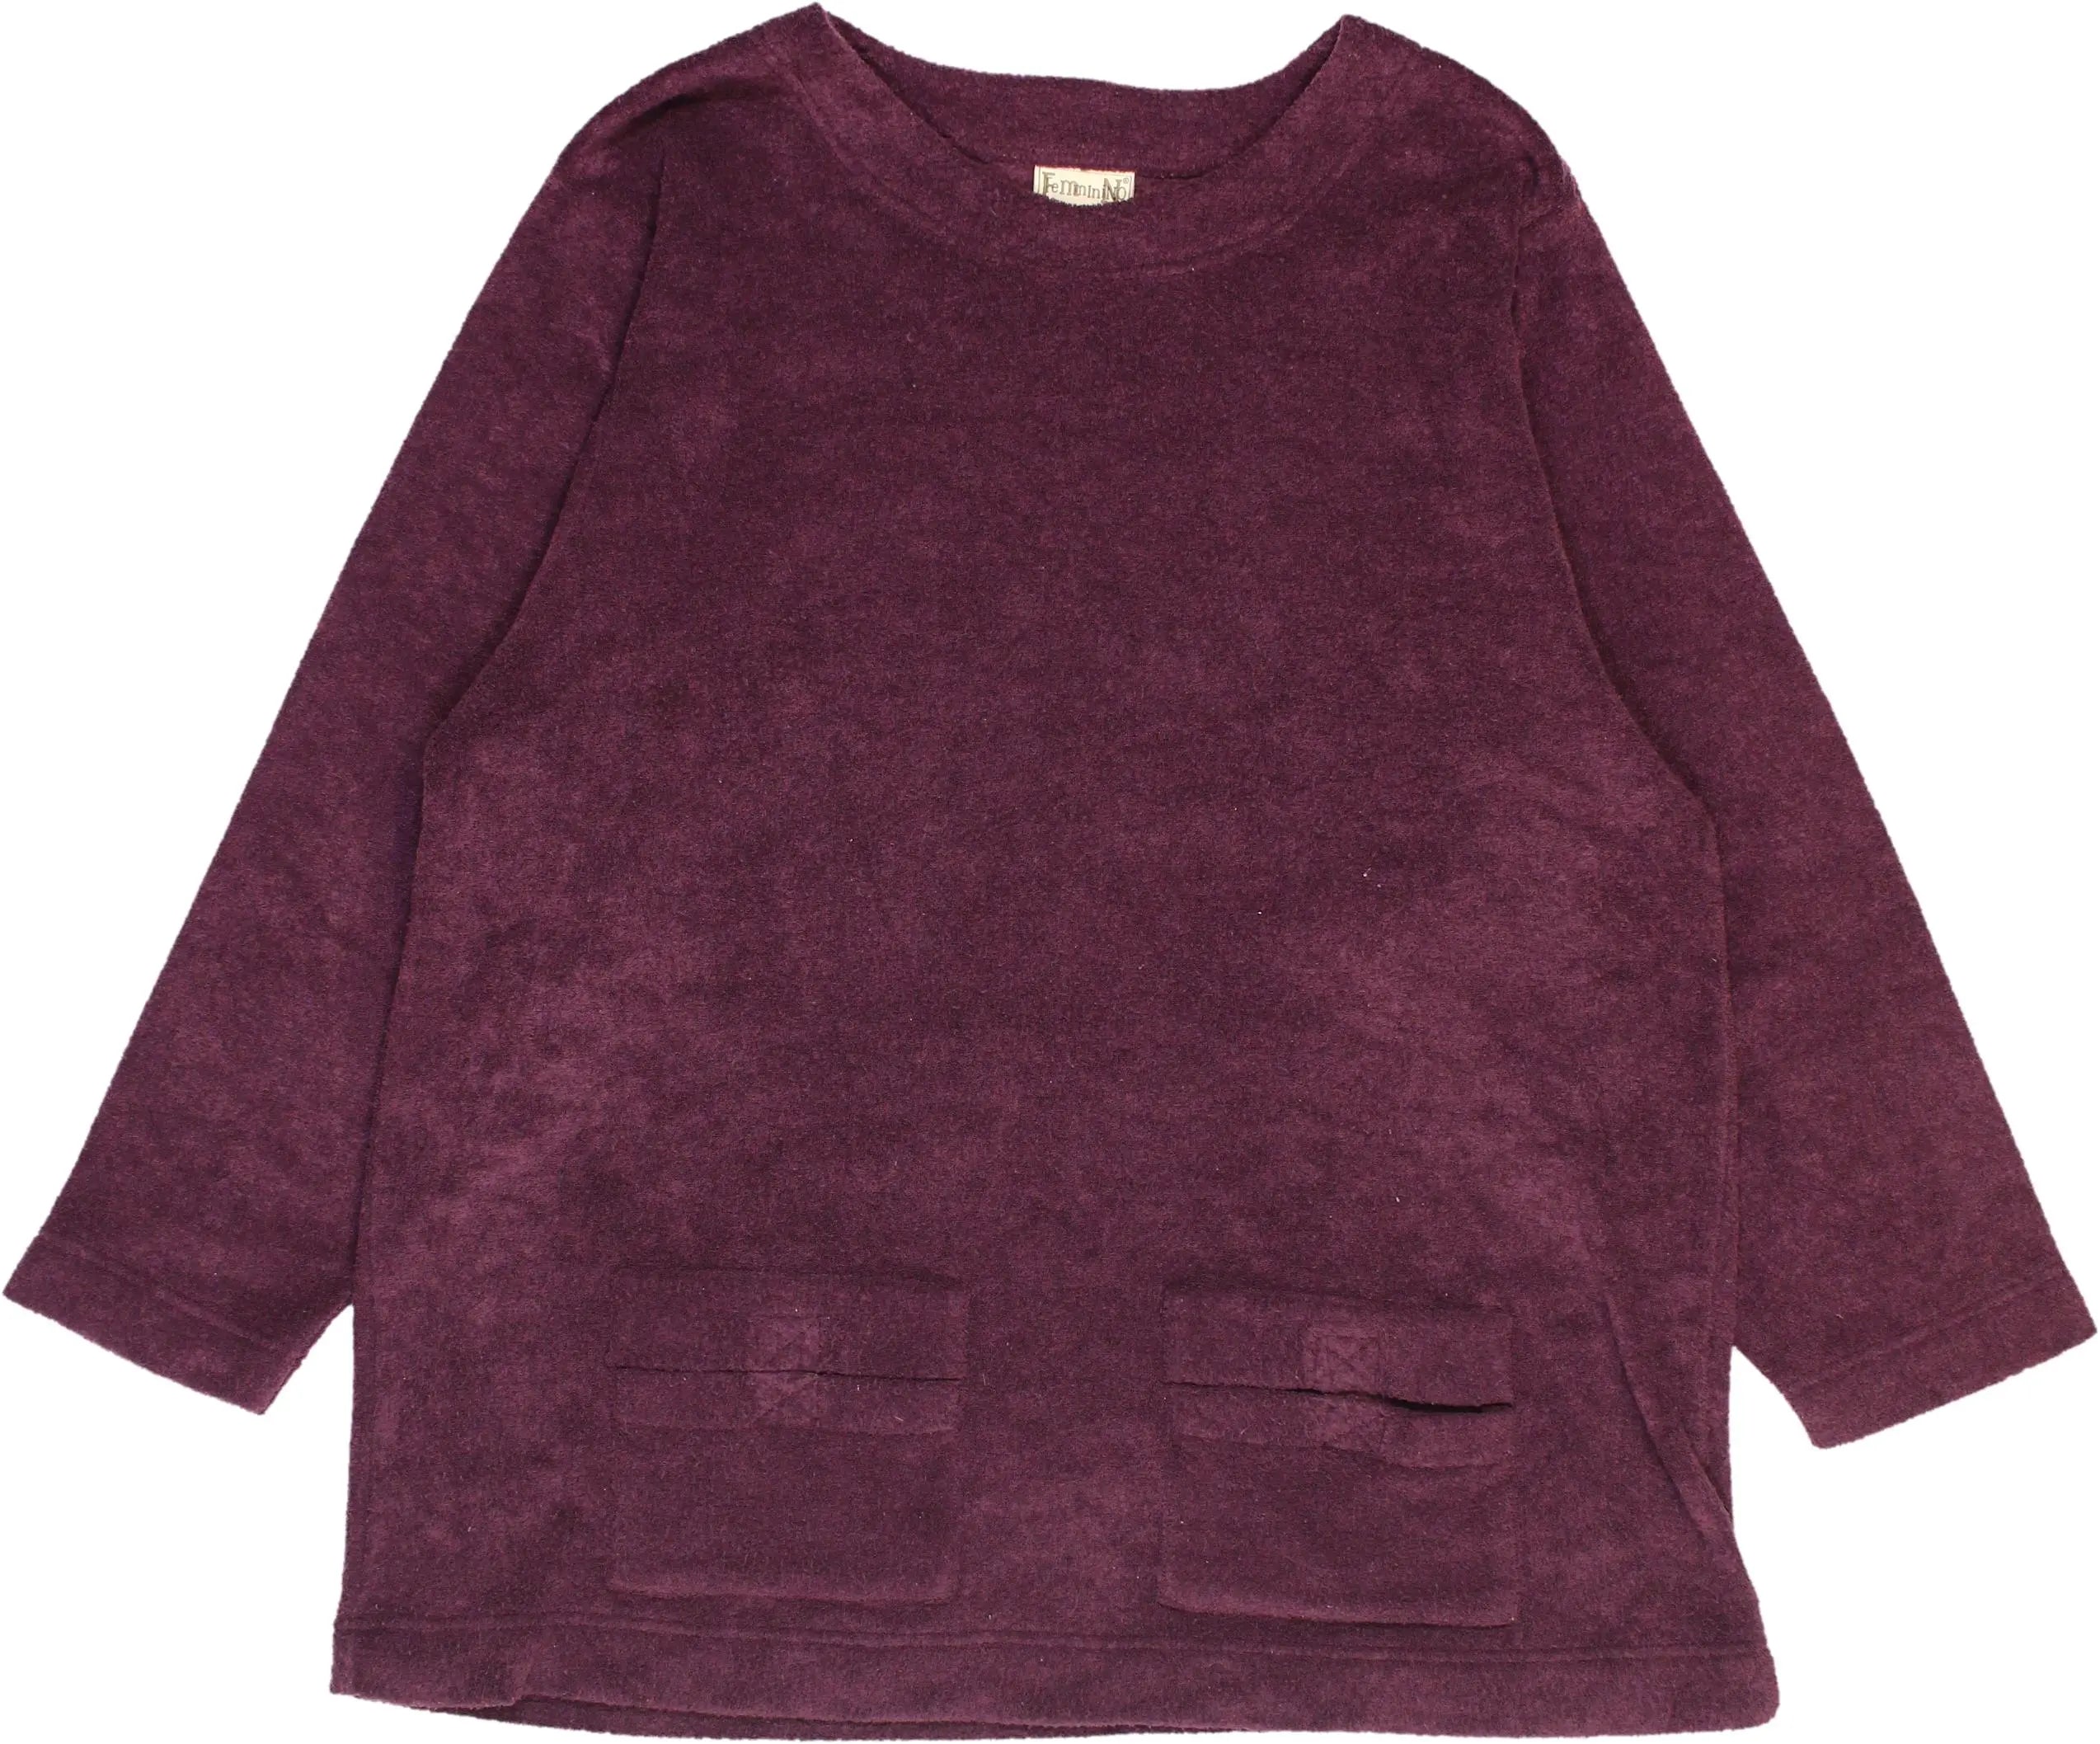 Feminino - Purple Plain Jumper- ThriftTale.com - Vintage and second handclothing